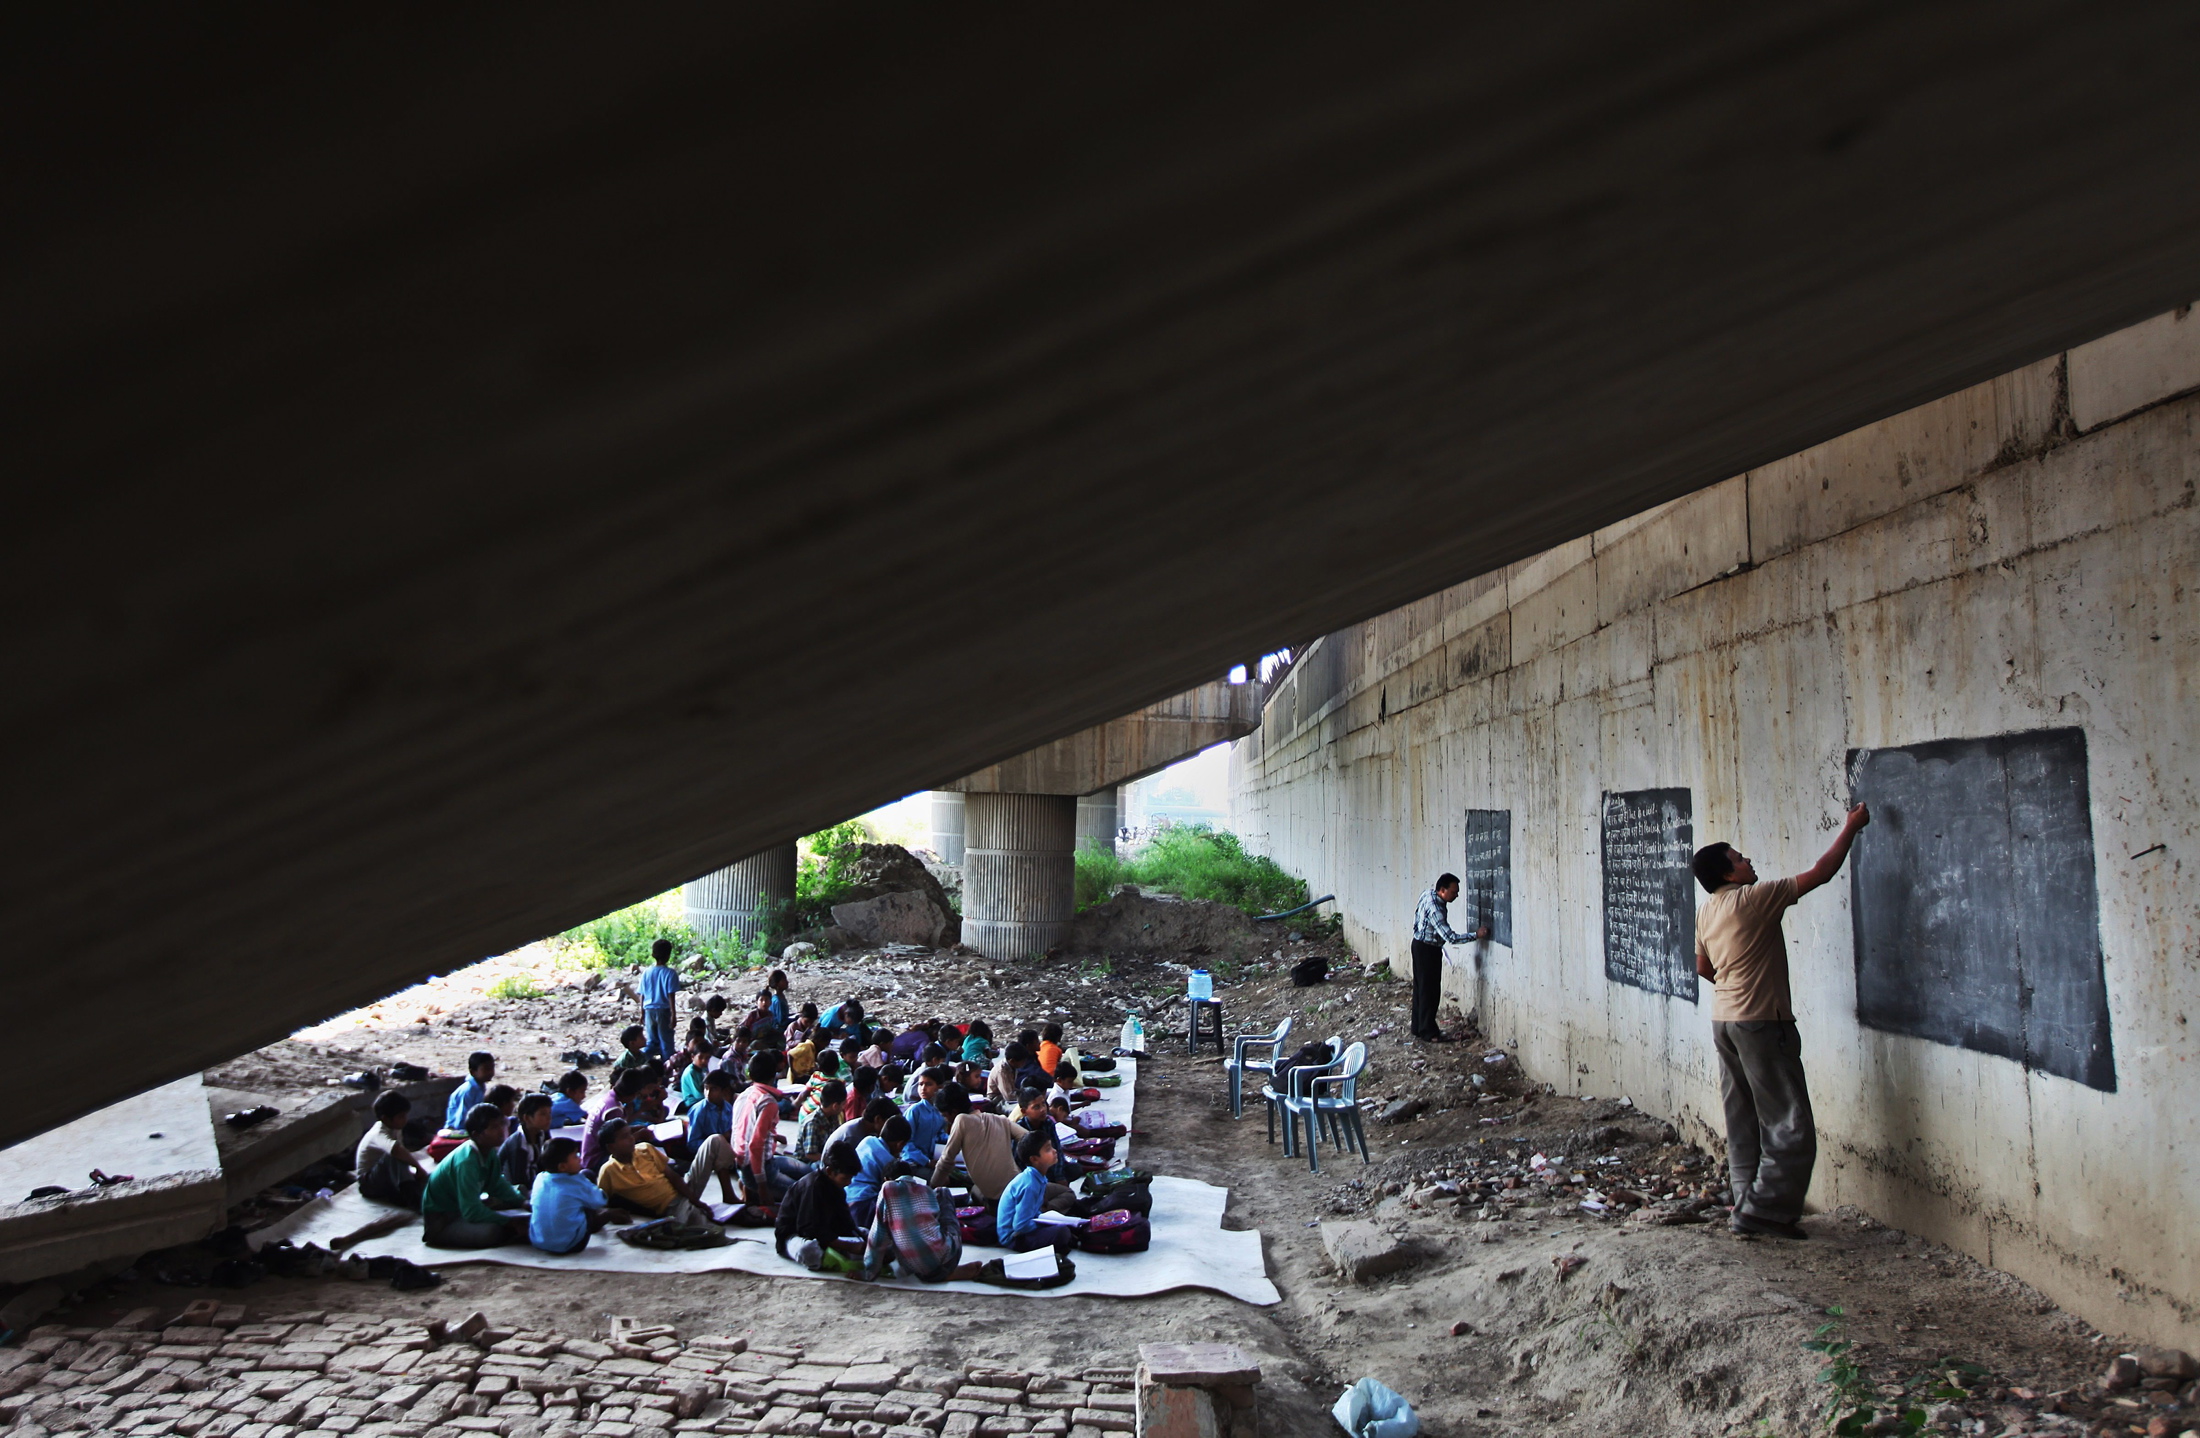 Laxmi Chandra, a postgraduate in science, teaches under the bridge as well.